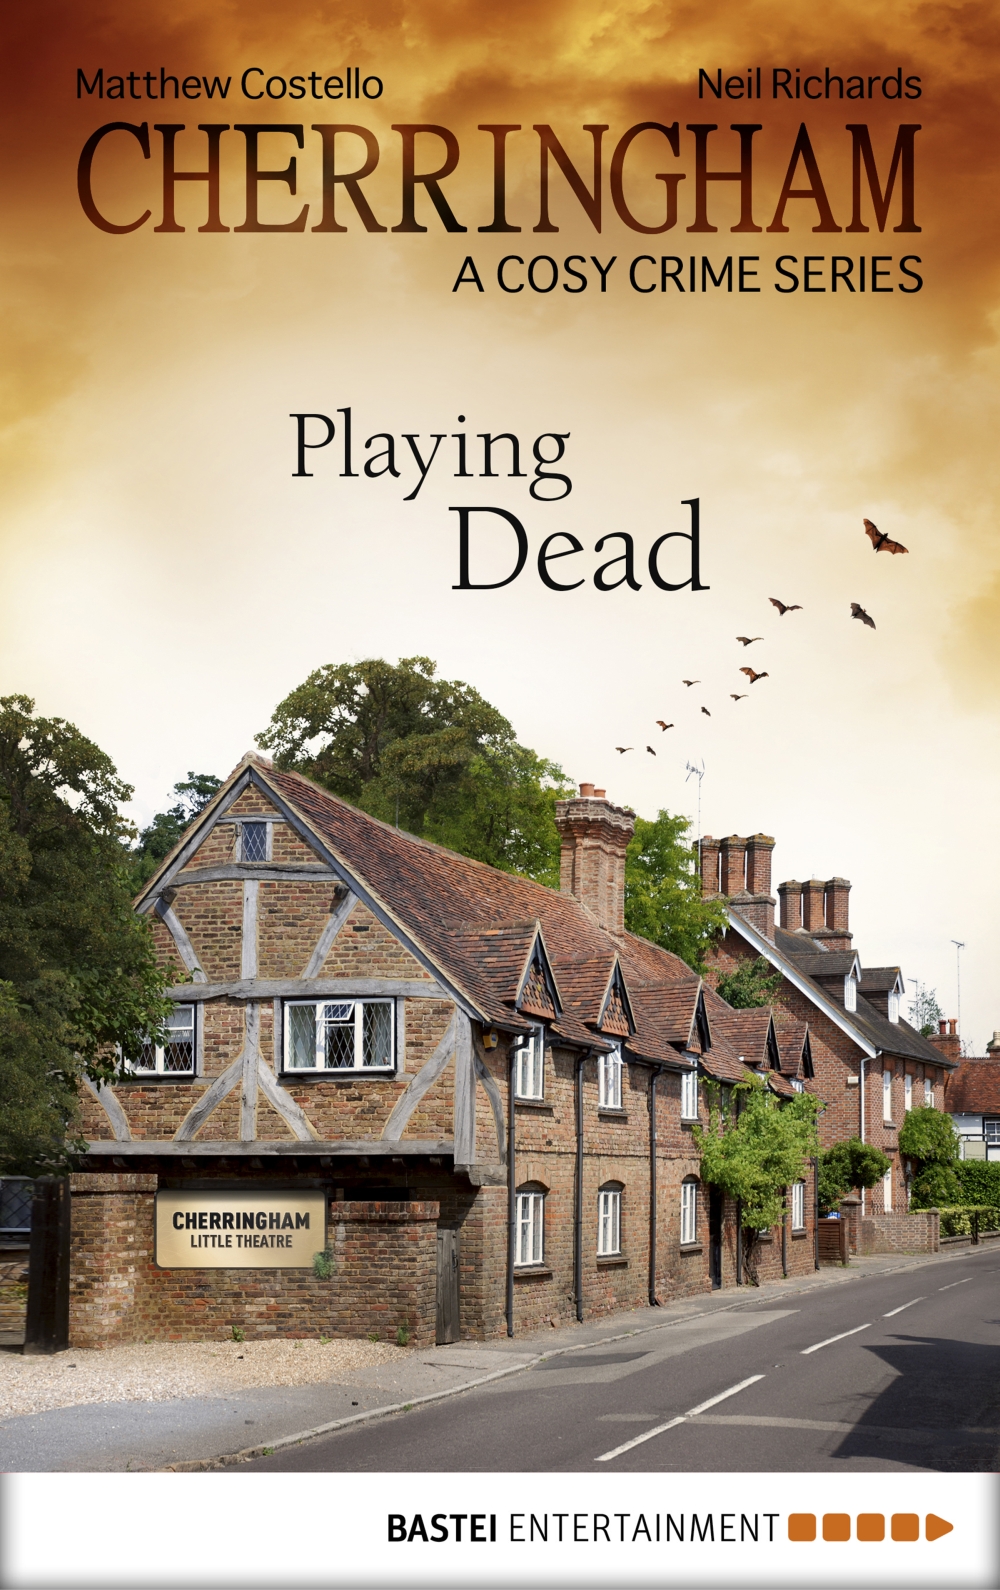 Cherringham--Playing Dead (2015) by Neil Richards